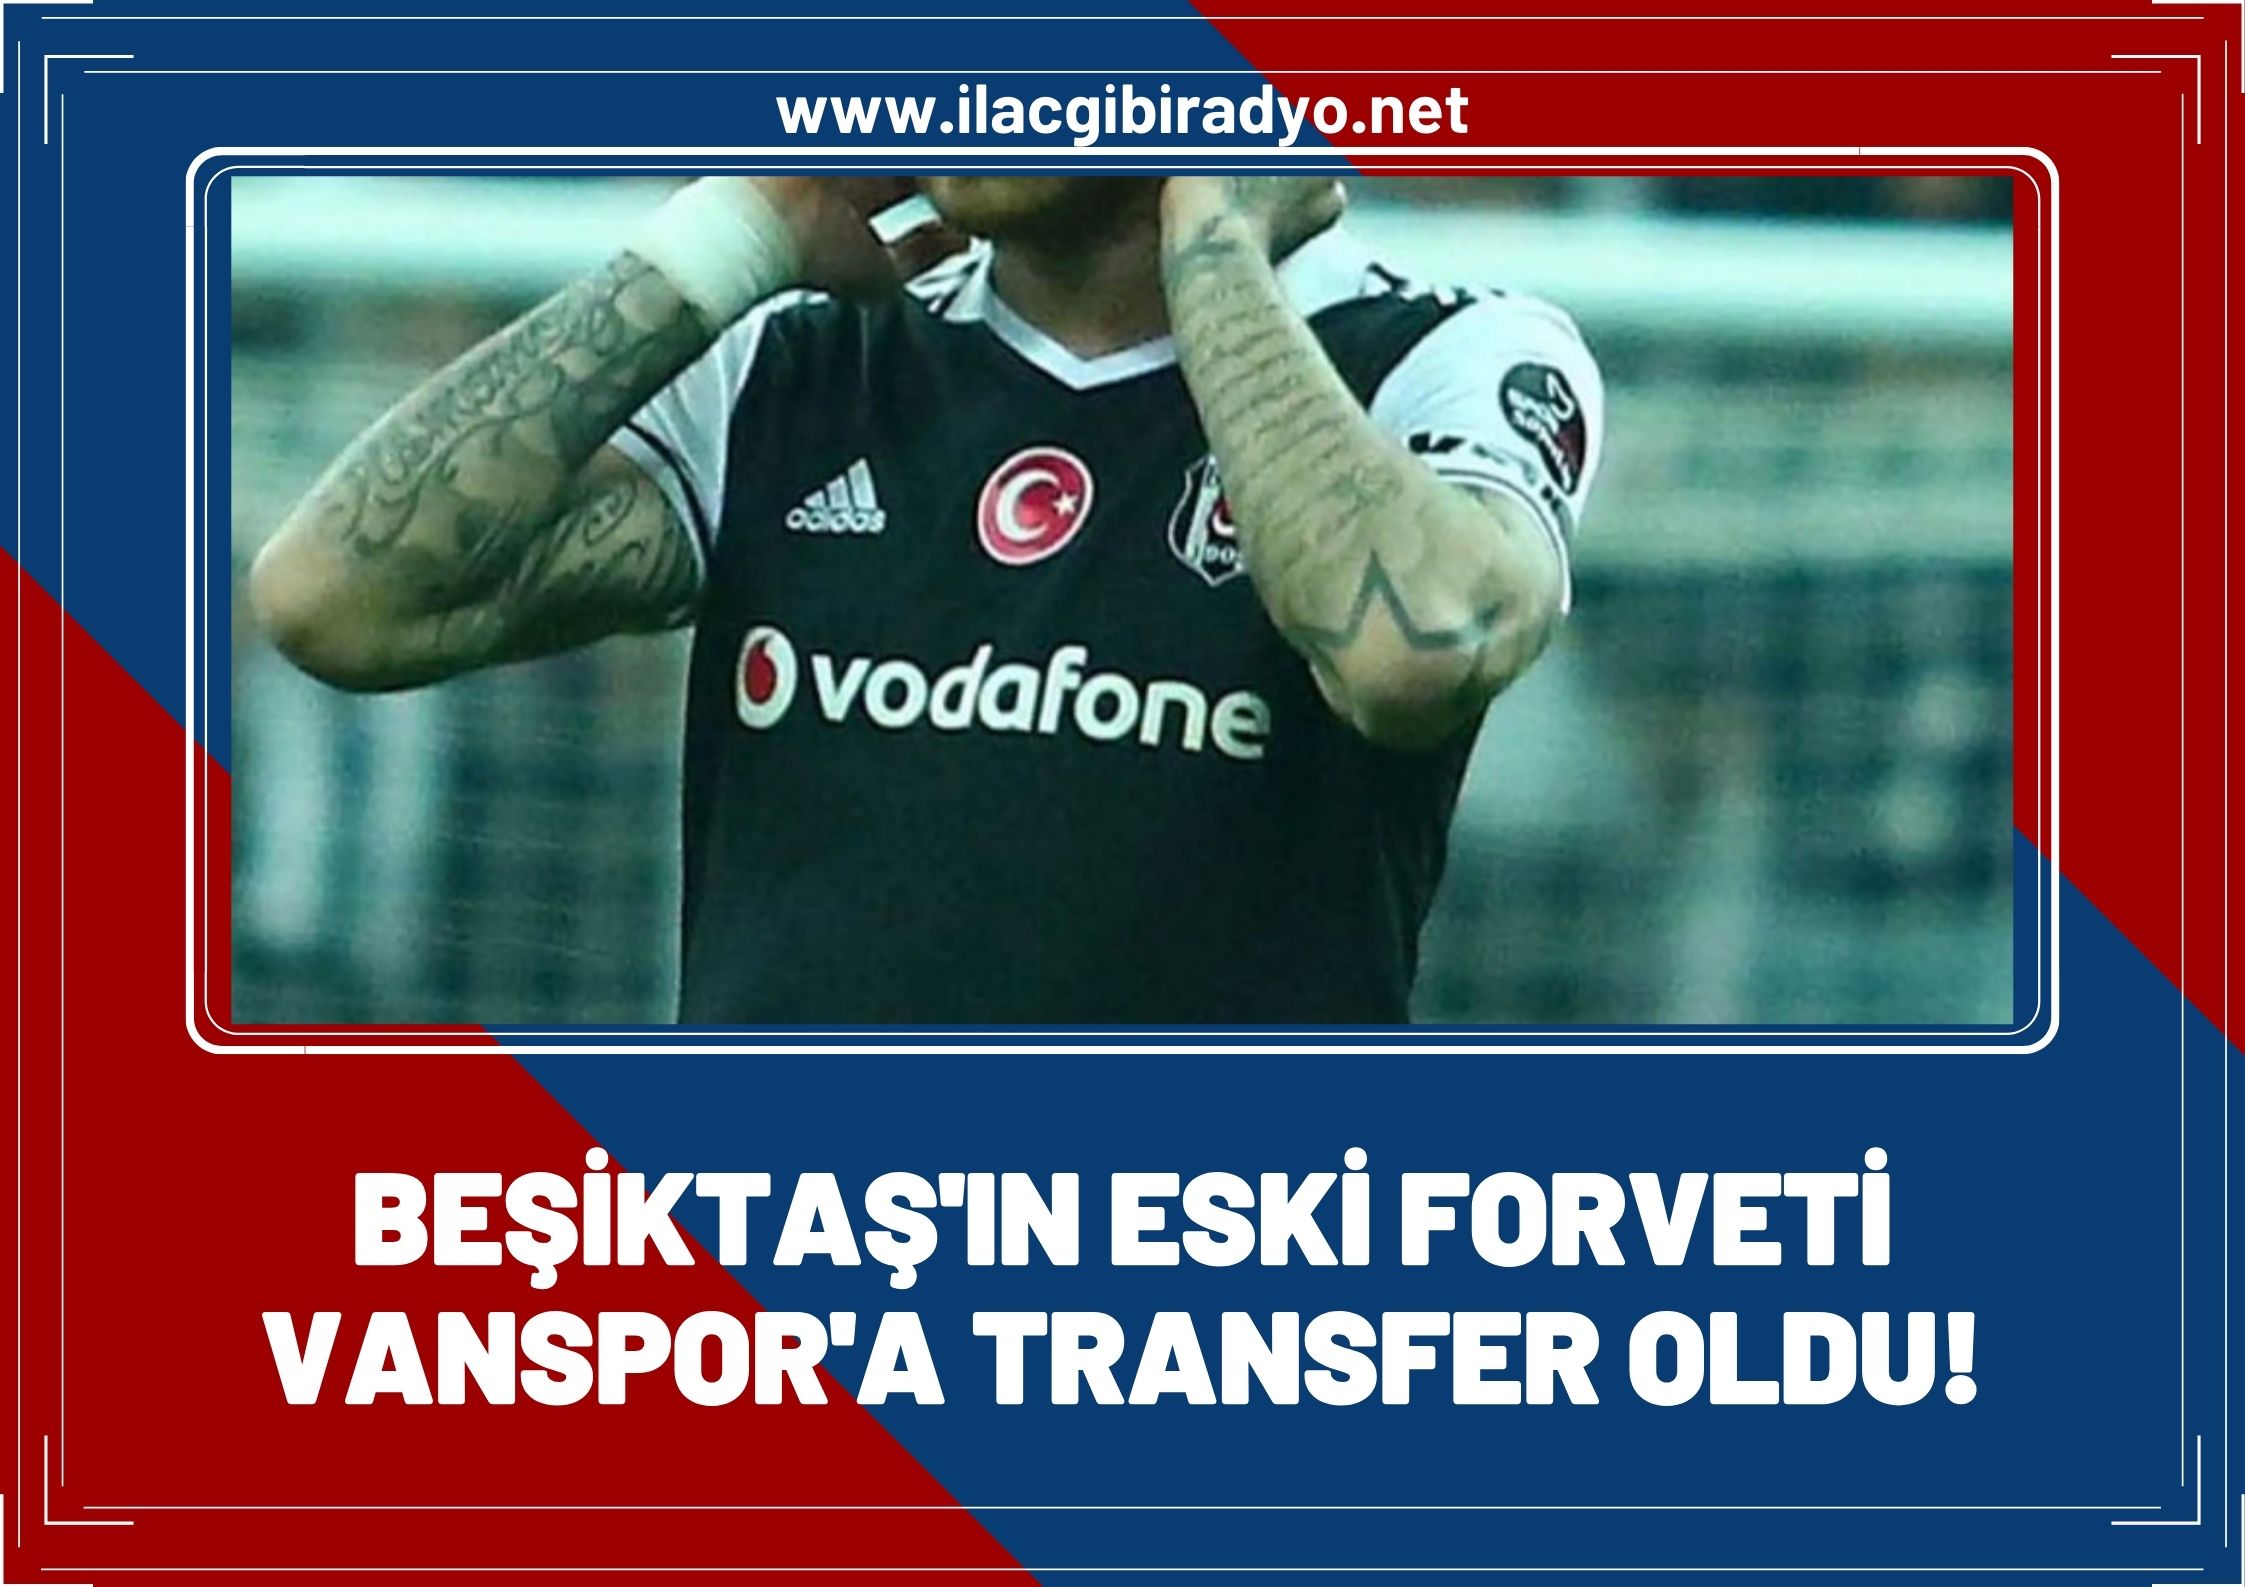 Beşiktaş'ın eski forveti, Vanspor'a transfer oldu